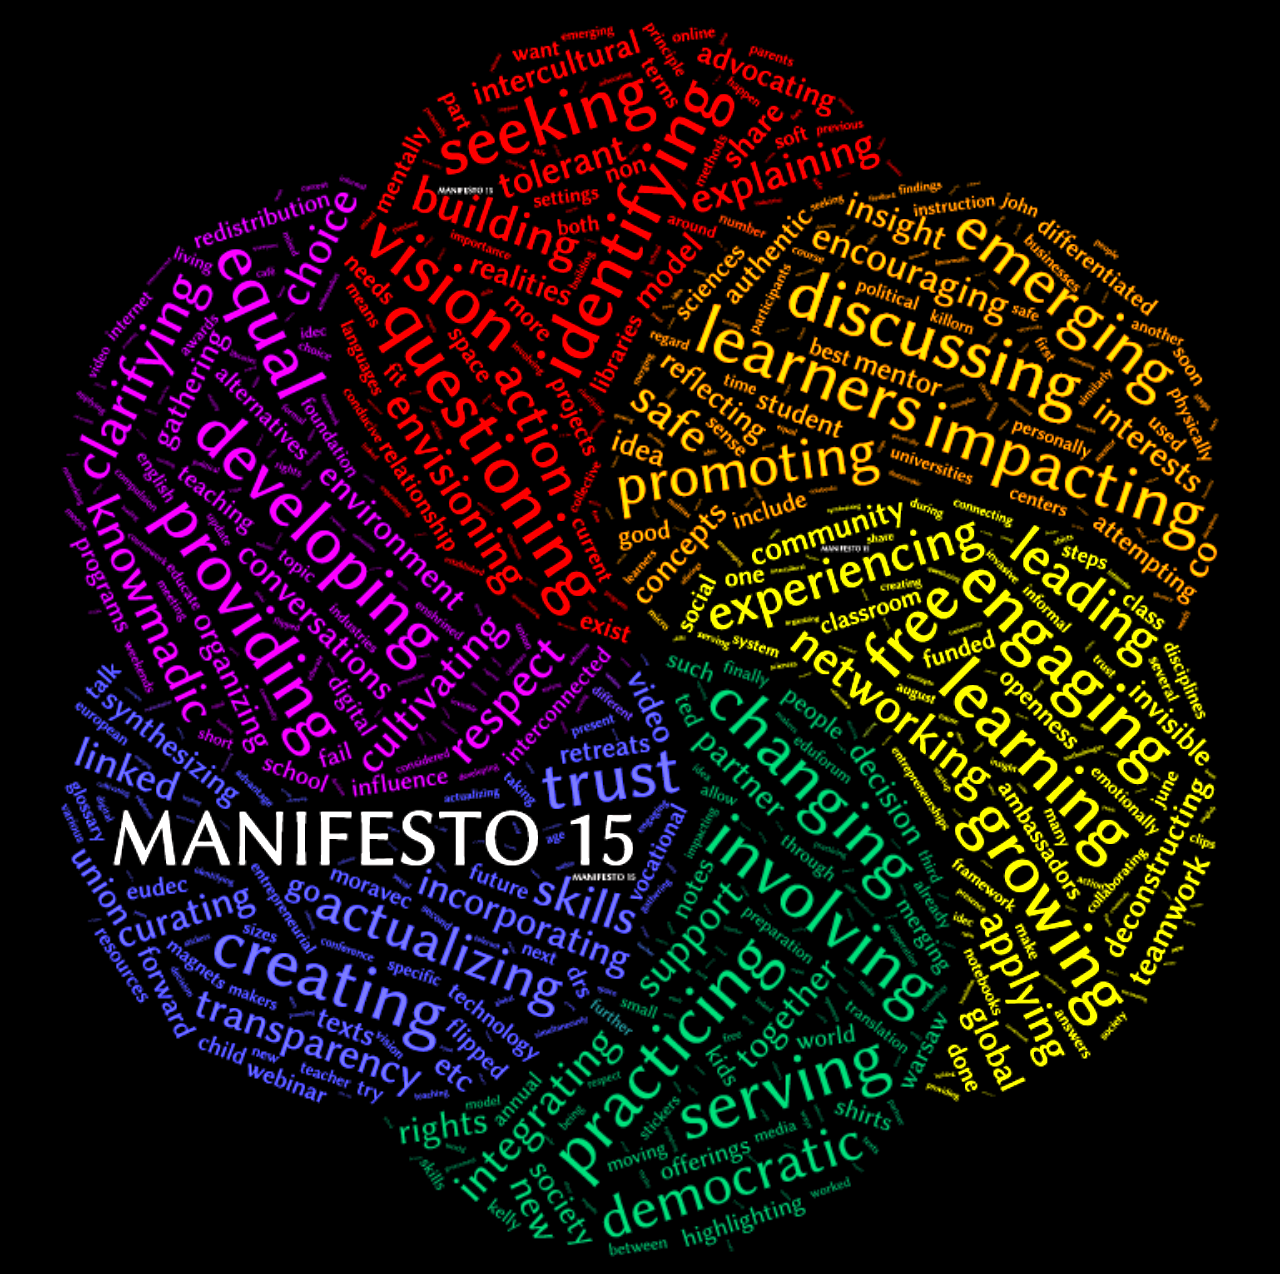 manifesto15-eudec.png